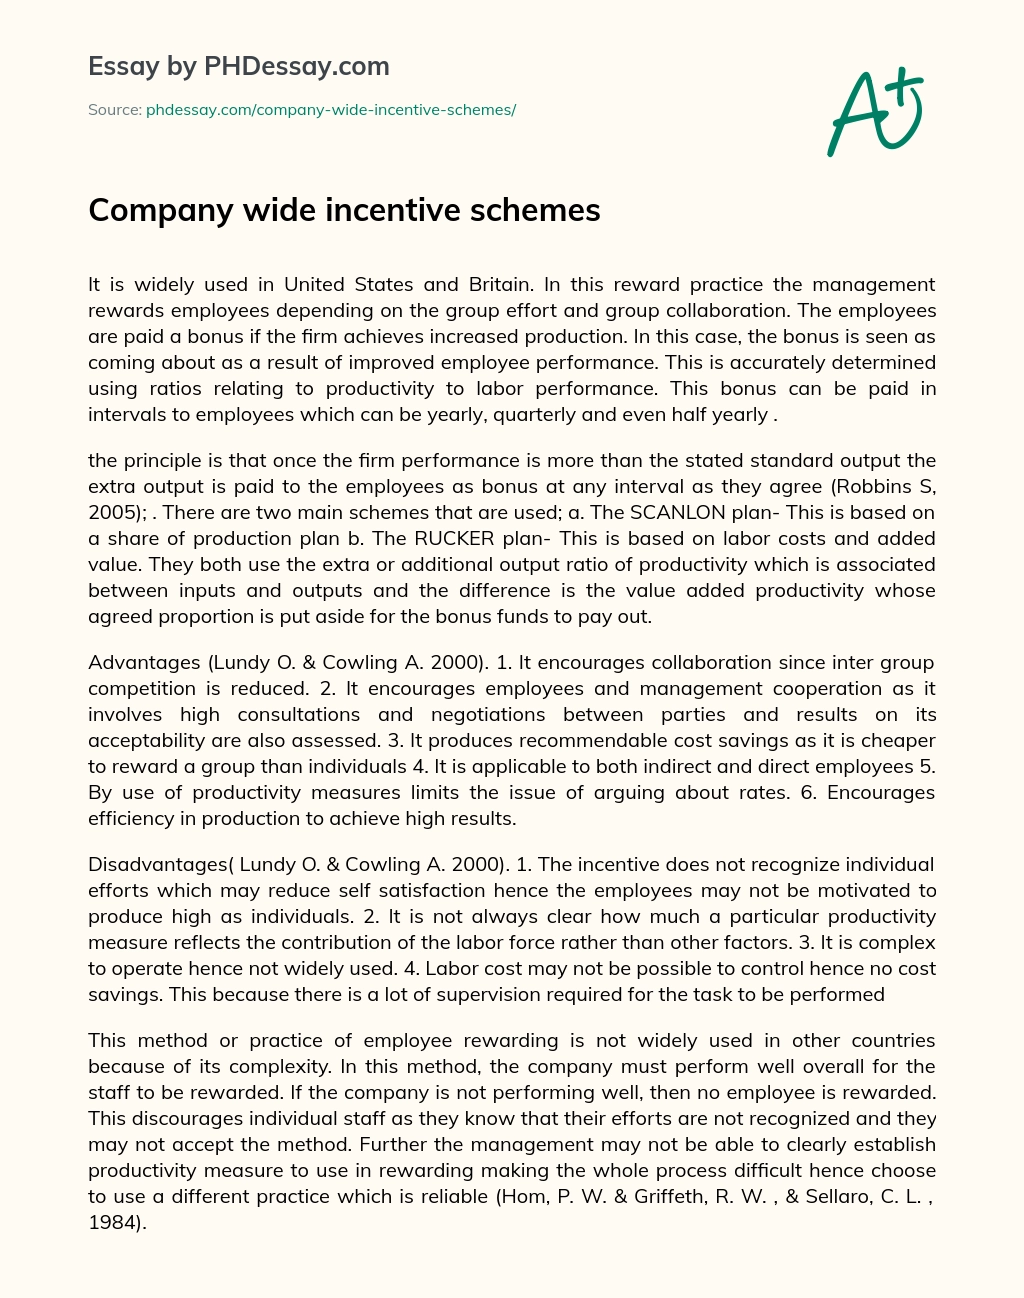 Company wide incentive schemes essay